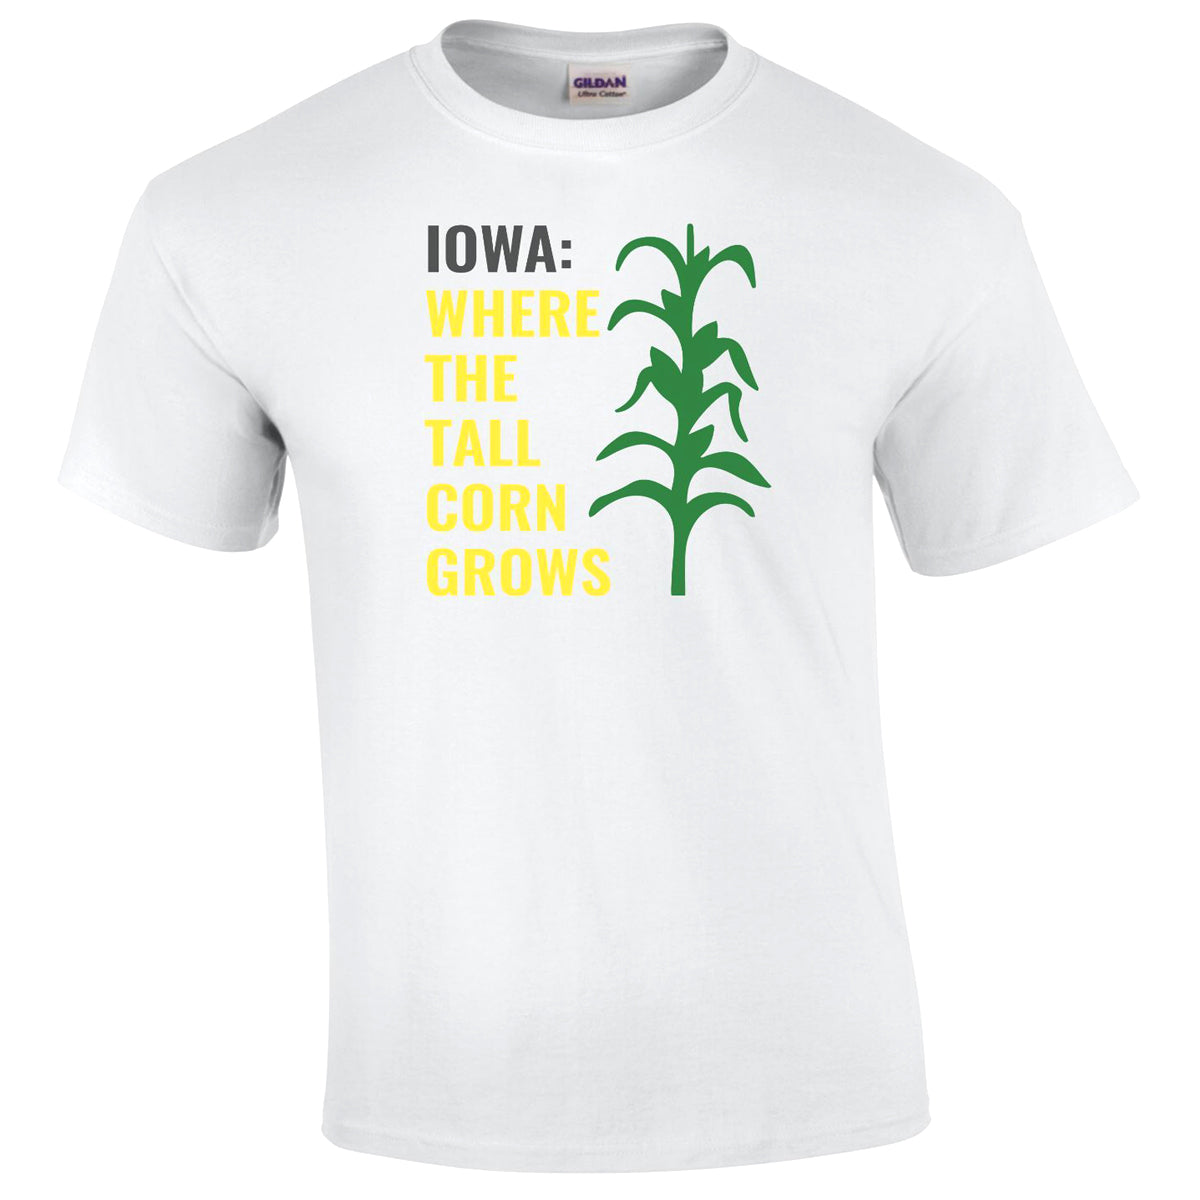 Iowa Tall Corn Printed Tee Humorous Shirt 411 Adult Small White 